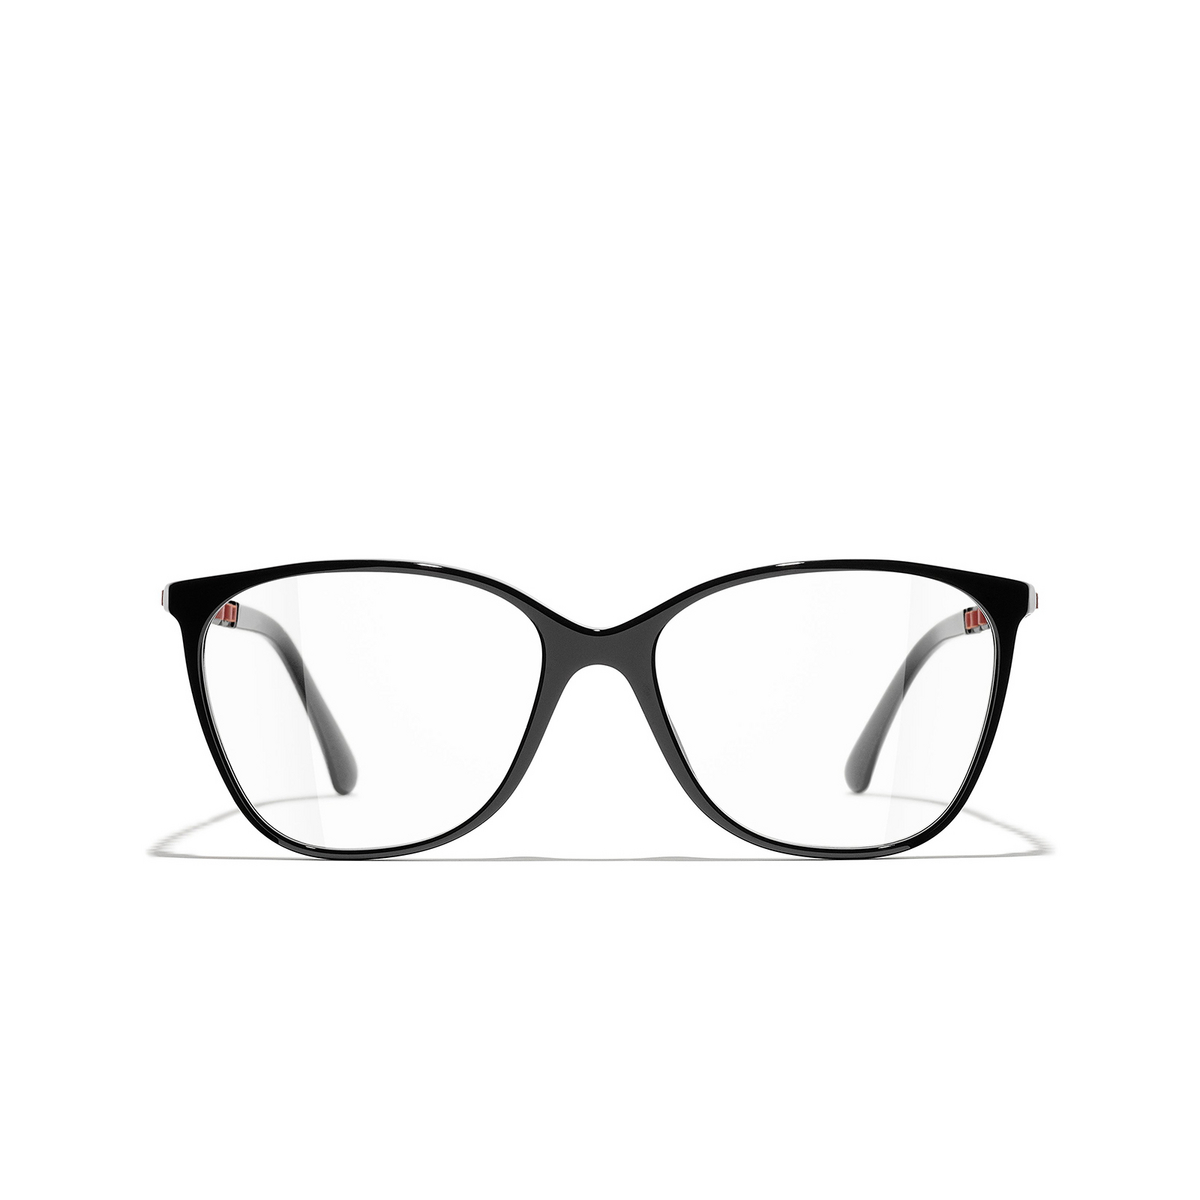 CHANEL square Eyeglasses 1713 Black & Orange  - front view